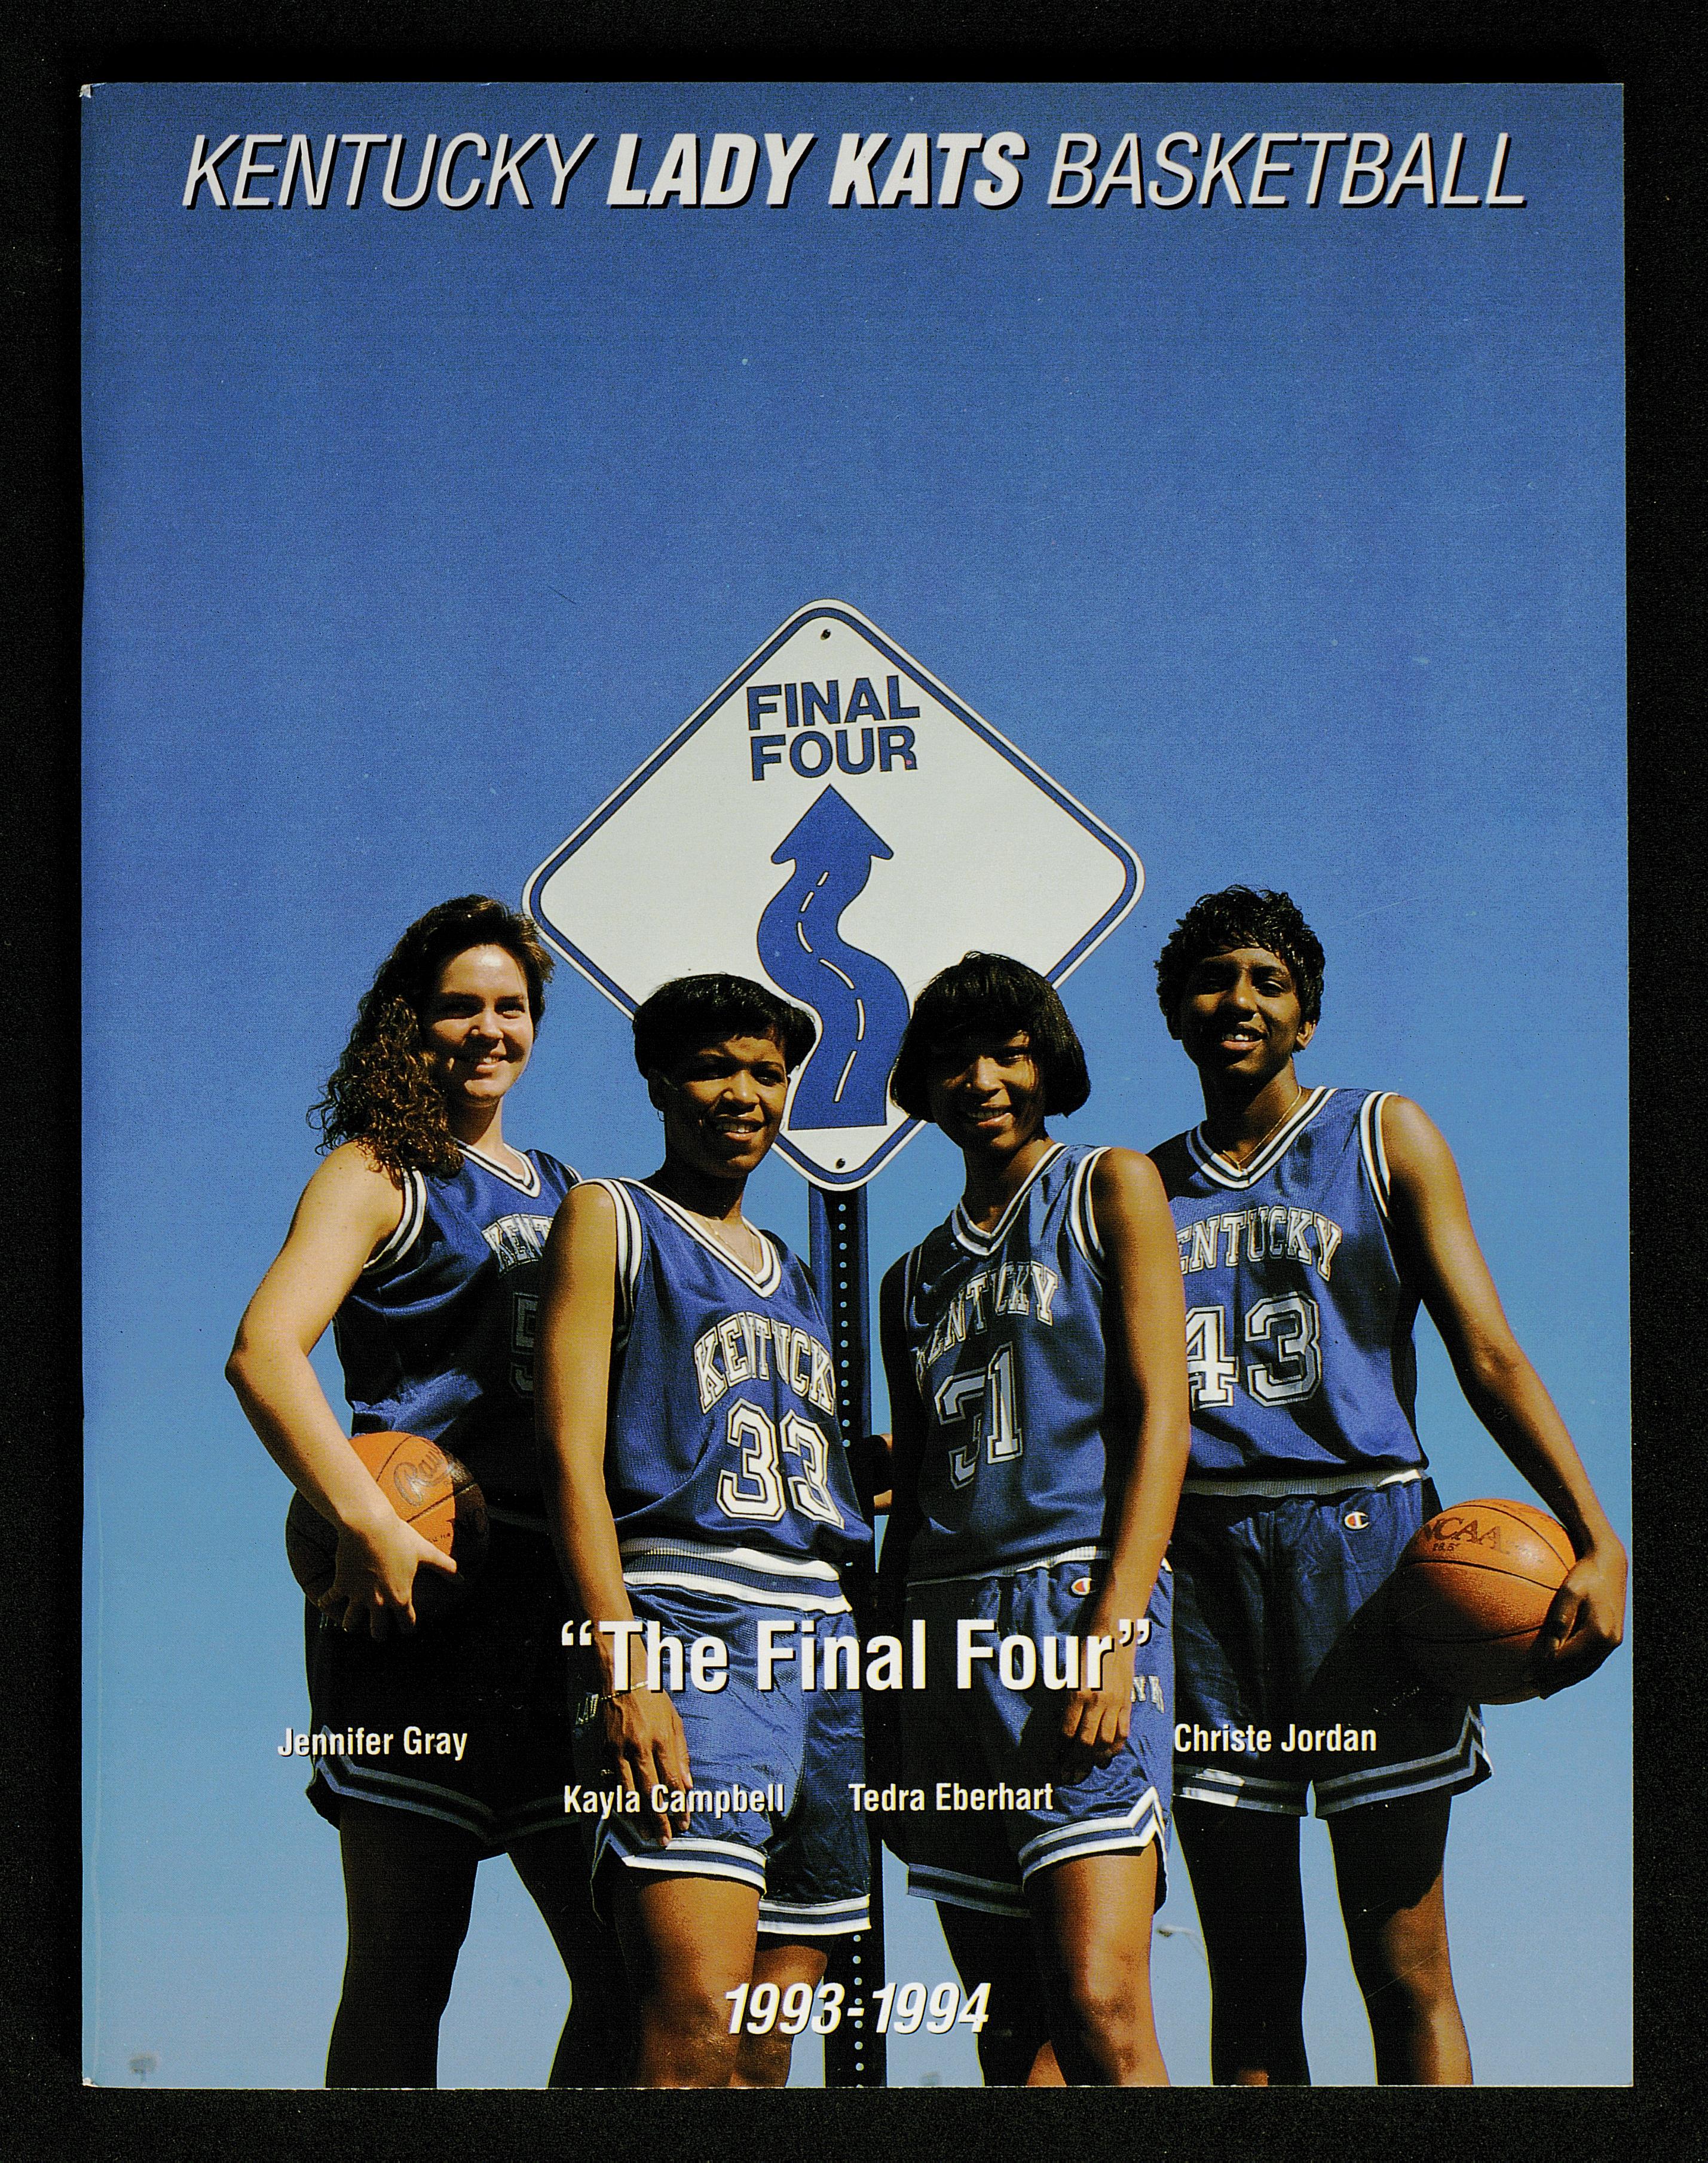 University of Kentucky women's basketball (Lady Kats) facts book 